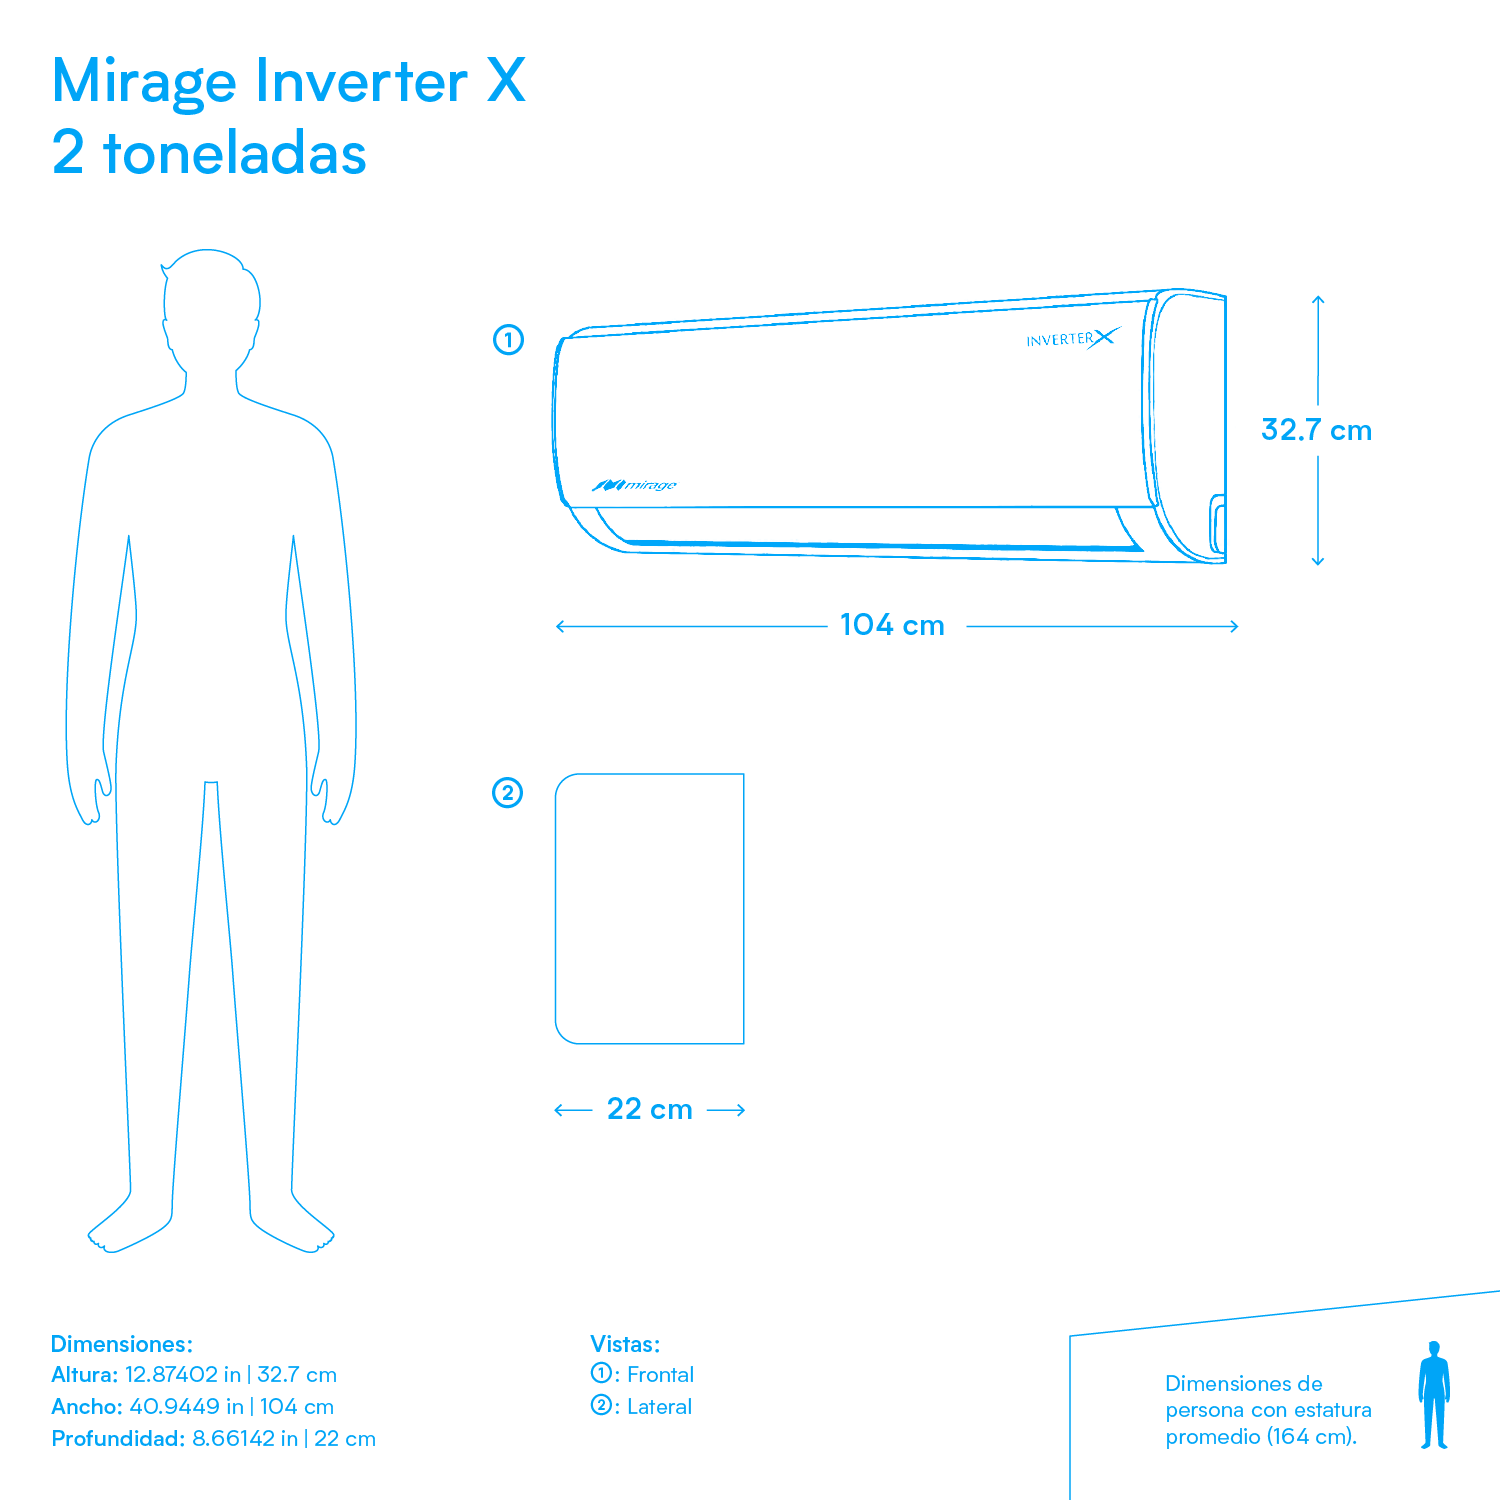 Minisplit Mirage Inverter X32 - 2 toneladas - 220v